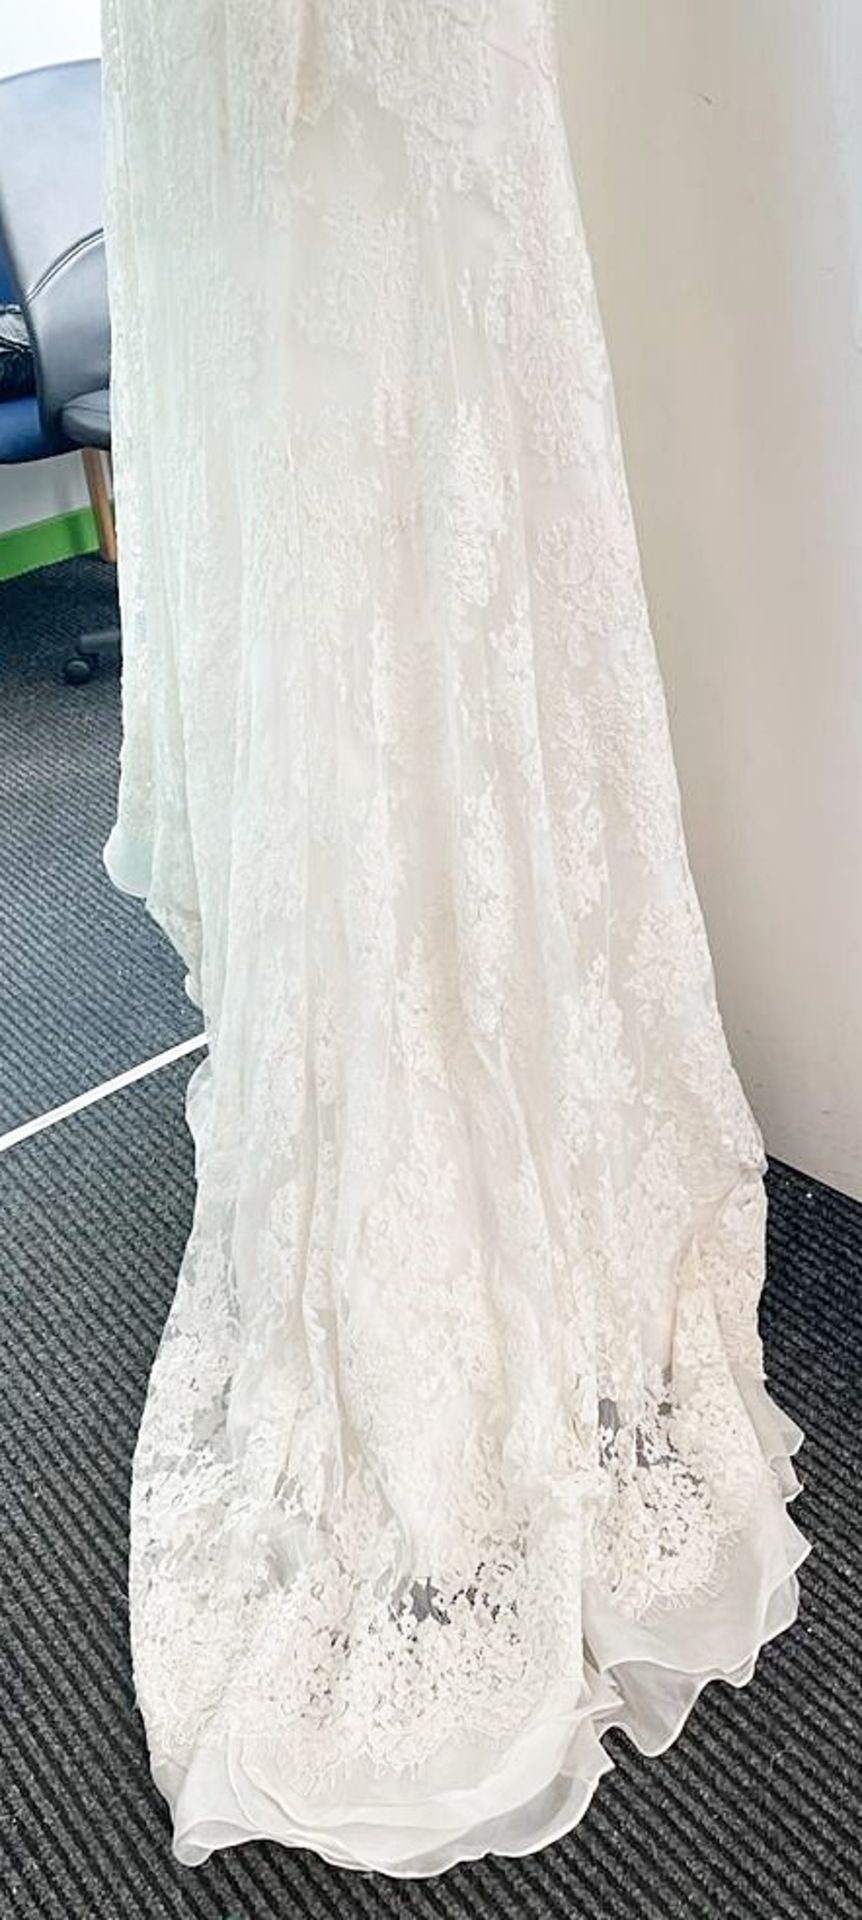 1 x ANNASUL Y 'Zelma' Designer Wedding Dress Bridal Gown - Size: UK 12 - Original RRP £1,750 - Image 9 of 11